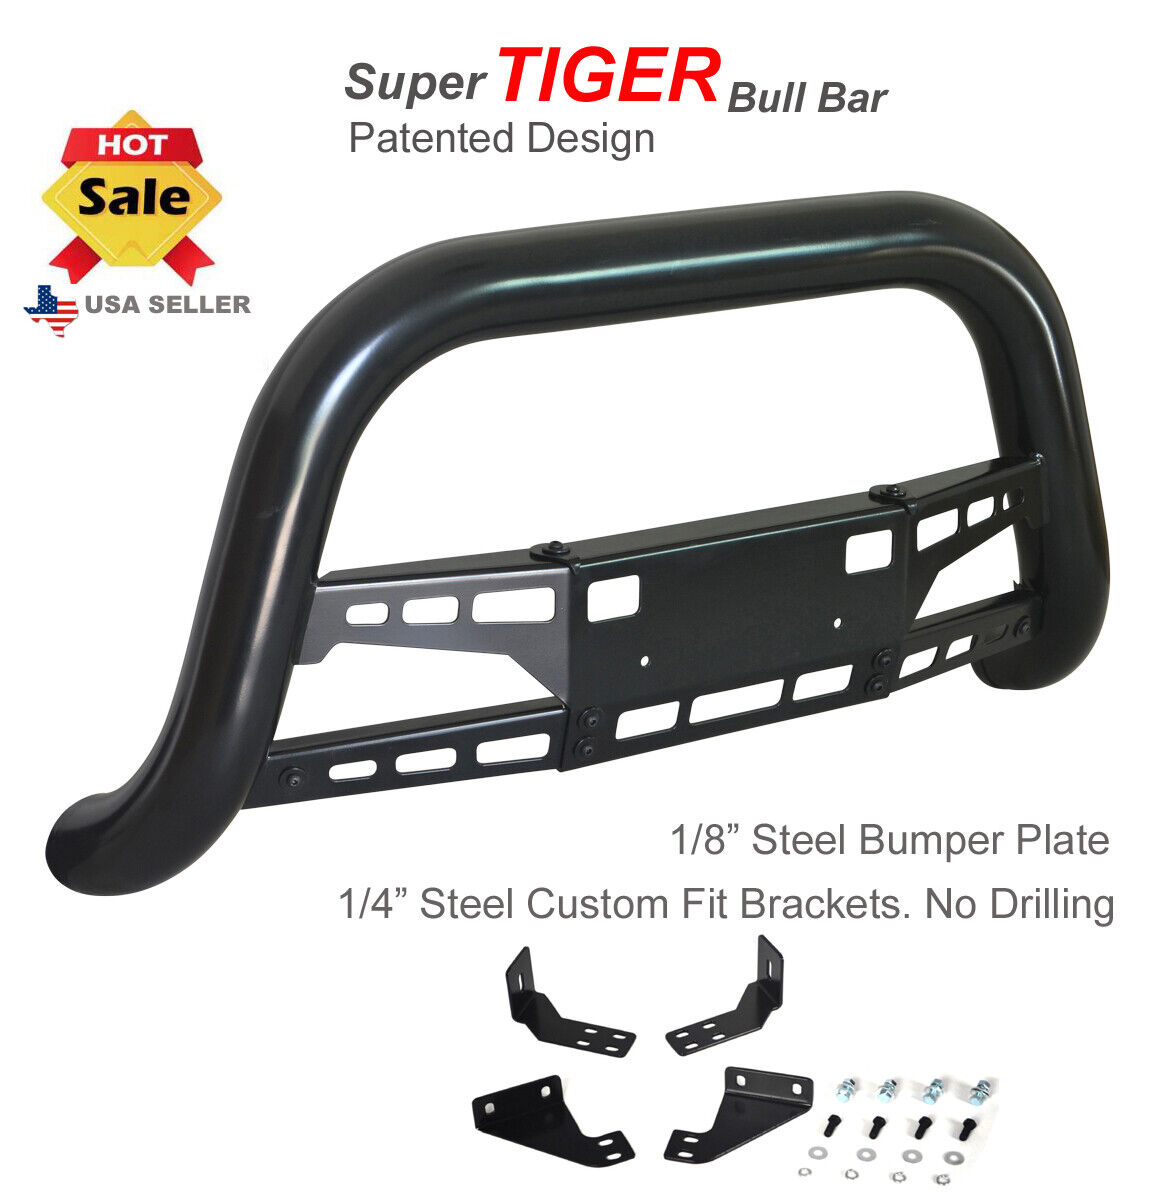 Super Tiger Bull Bar Fits 08-12 NissanPathfinder / 09-19 Frontier / 10-17 Xterra